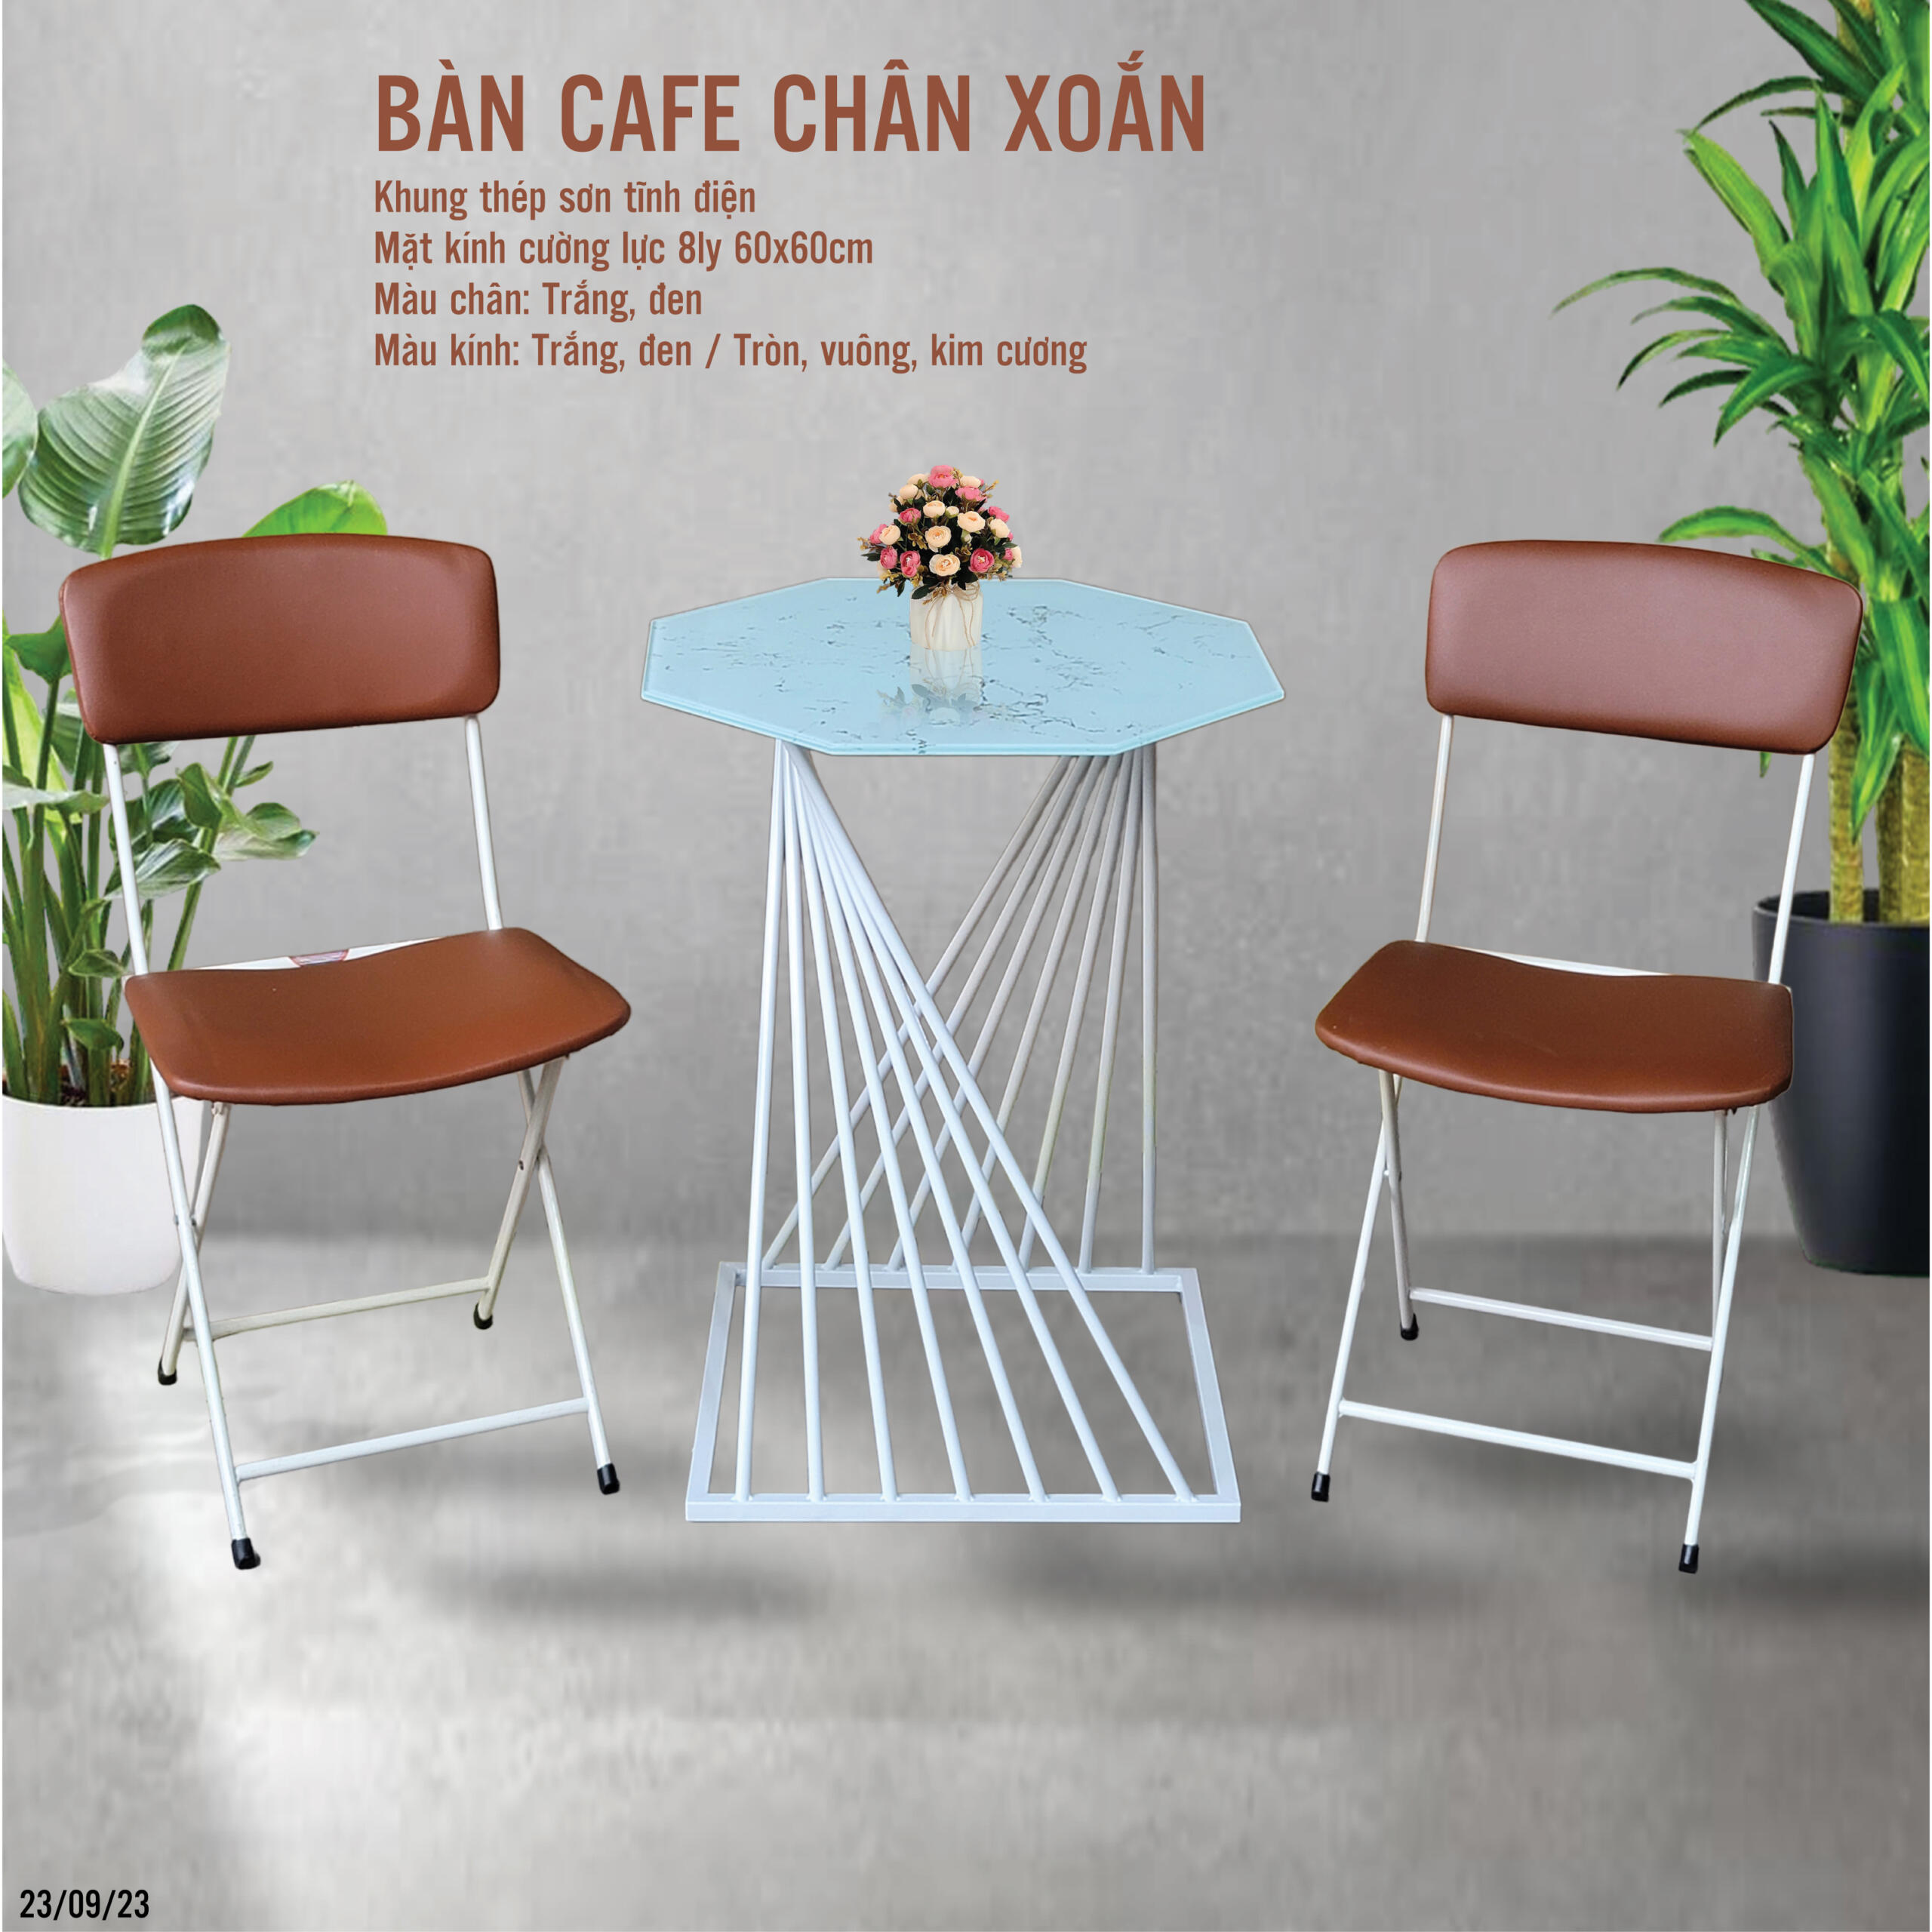 khong gia - ban cafe (7)